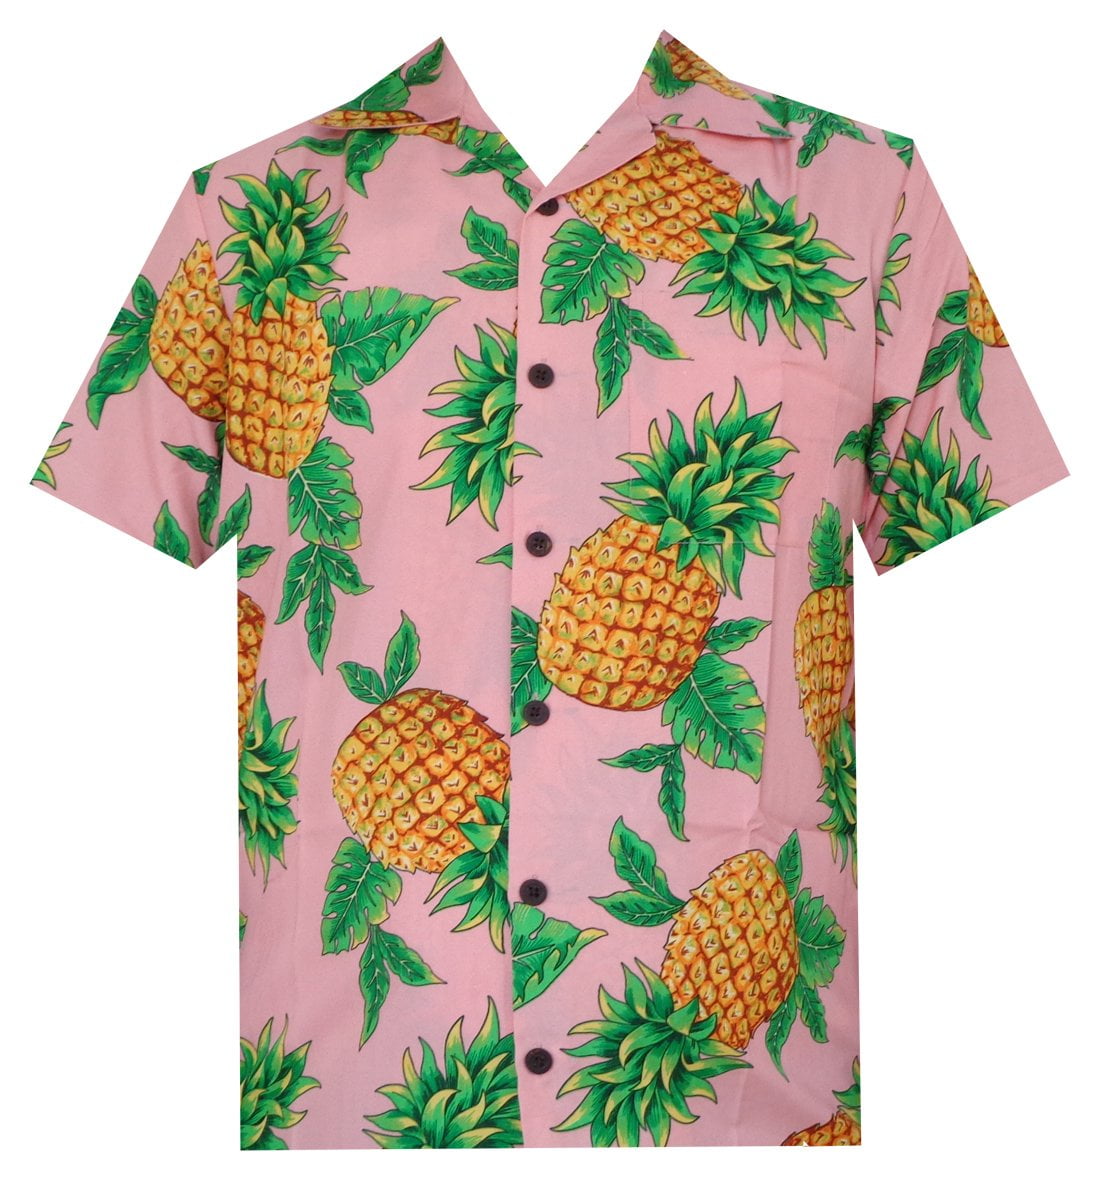 Gift for Pineapple Lover Birthday Gift Idea for Couple SKULL Hawaii shirt Skull Summer Button Up Shirt,Pineapple Aloha Shirt